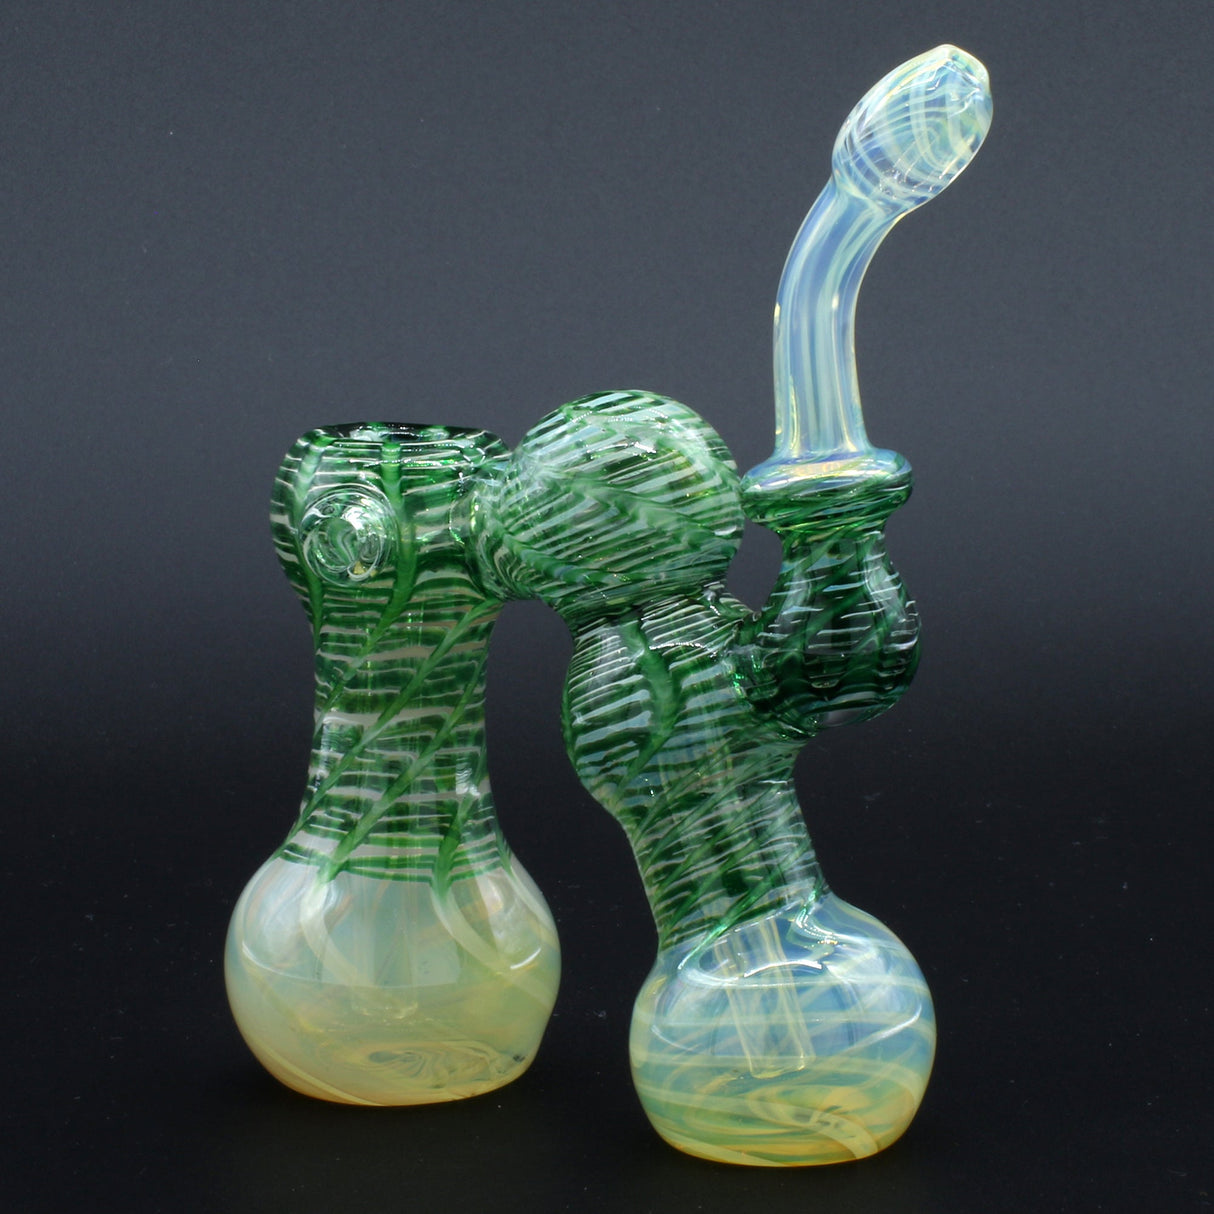 Clayball Glass "Dub-Bubb" Sherlock Double Bubbler with Heady Green Swirl Design